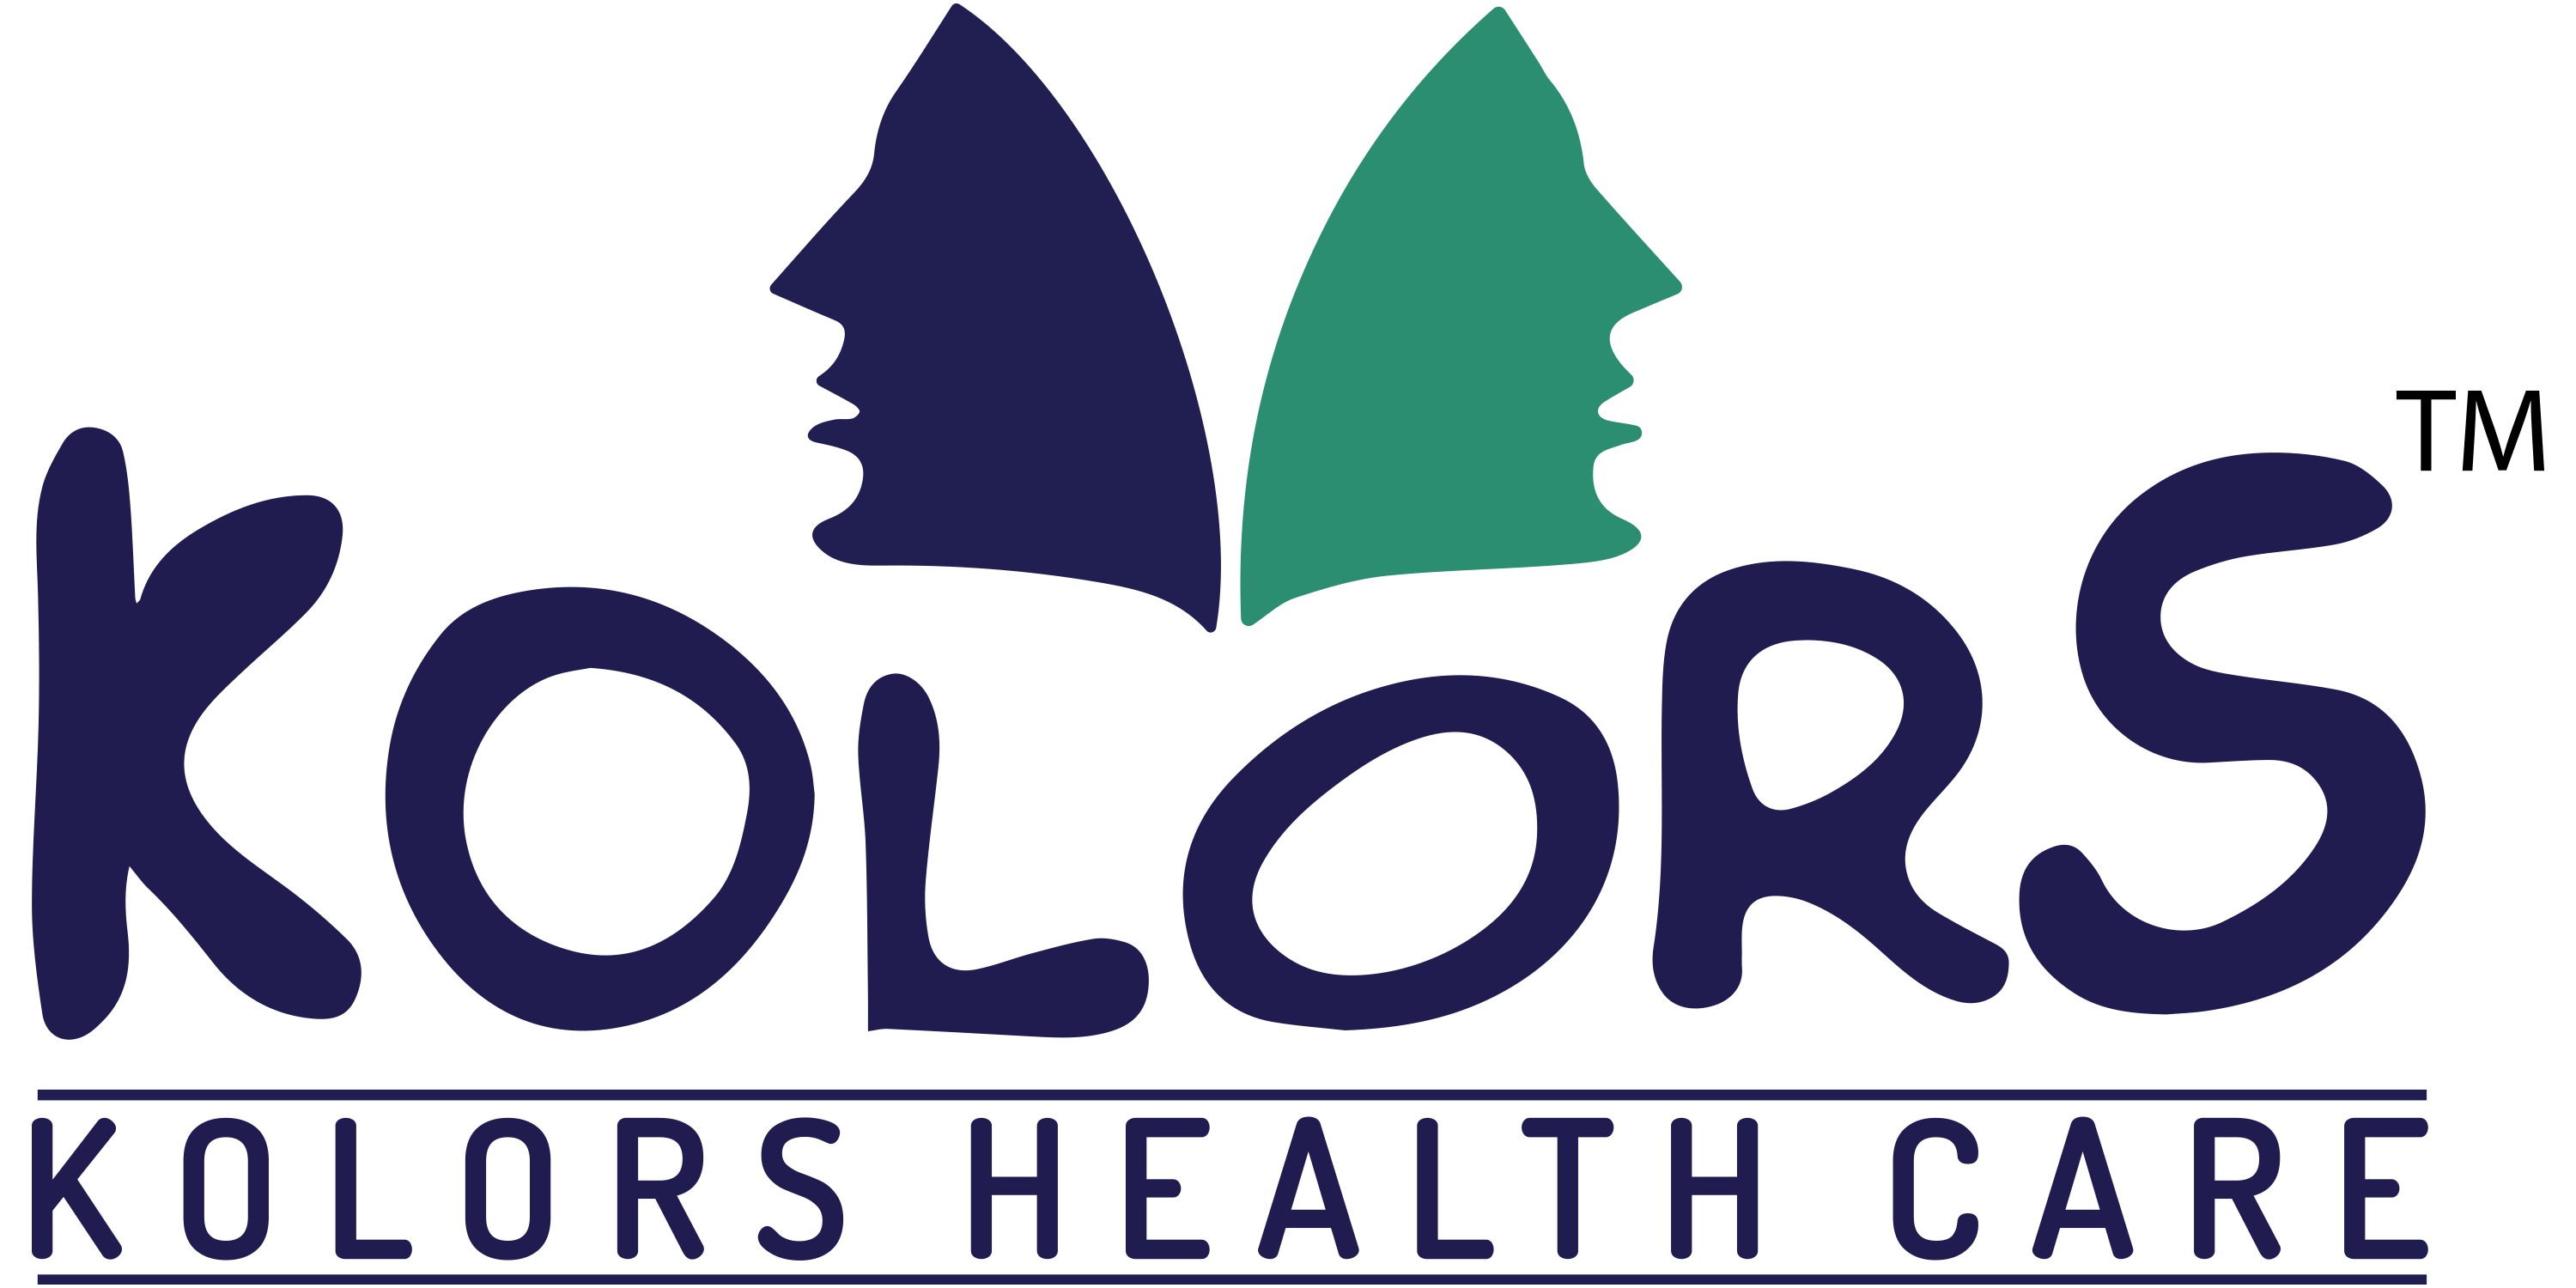 Kolors Healthcare India Pvt Ltd logo